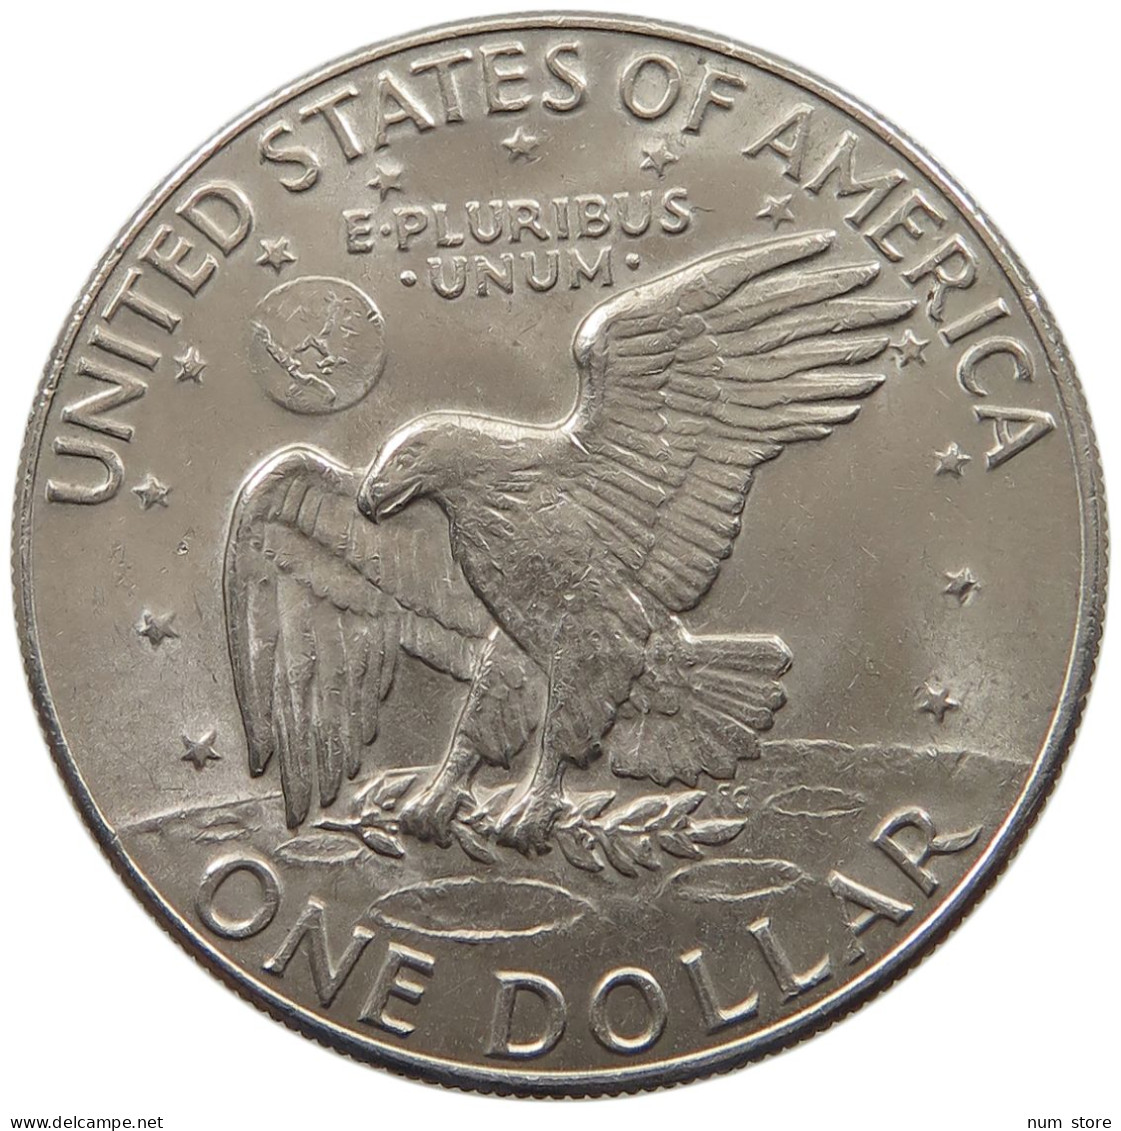 UNITED STATES OF AMERICA DOLLAR 1974 D EISENHOWER #c077 0185 - 1971-1978: Eisenhower